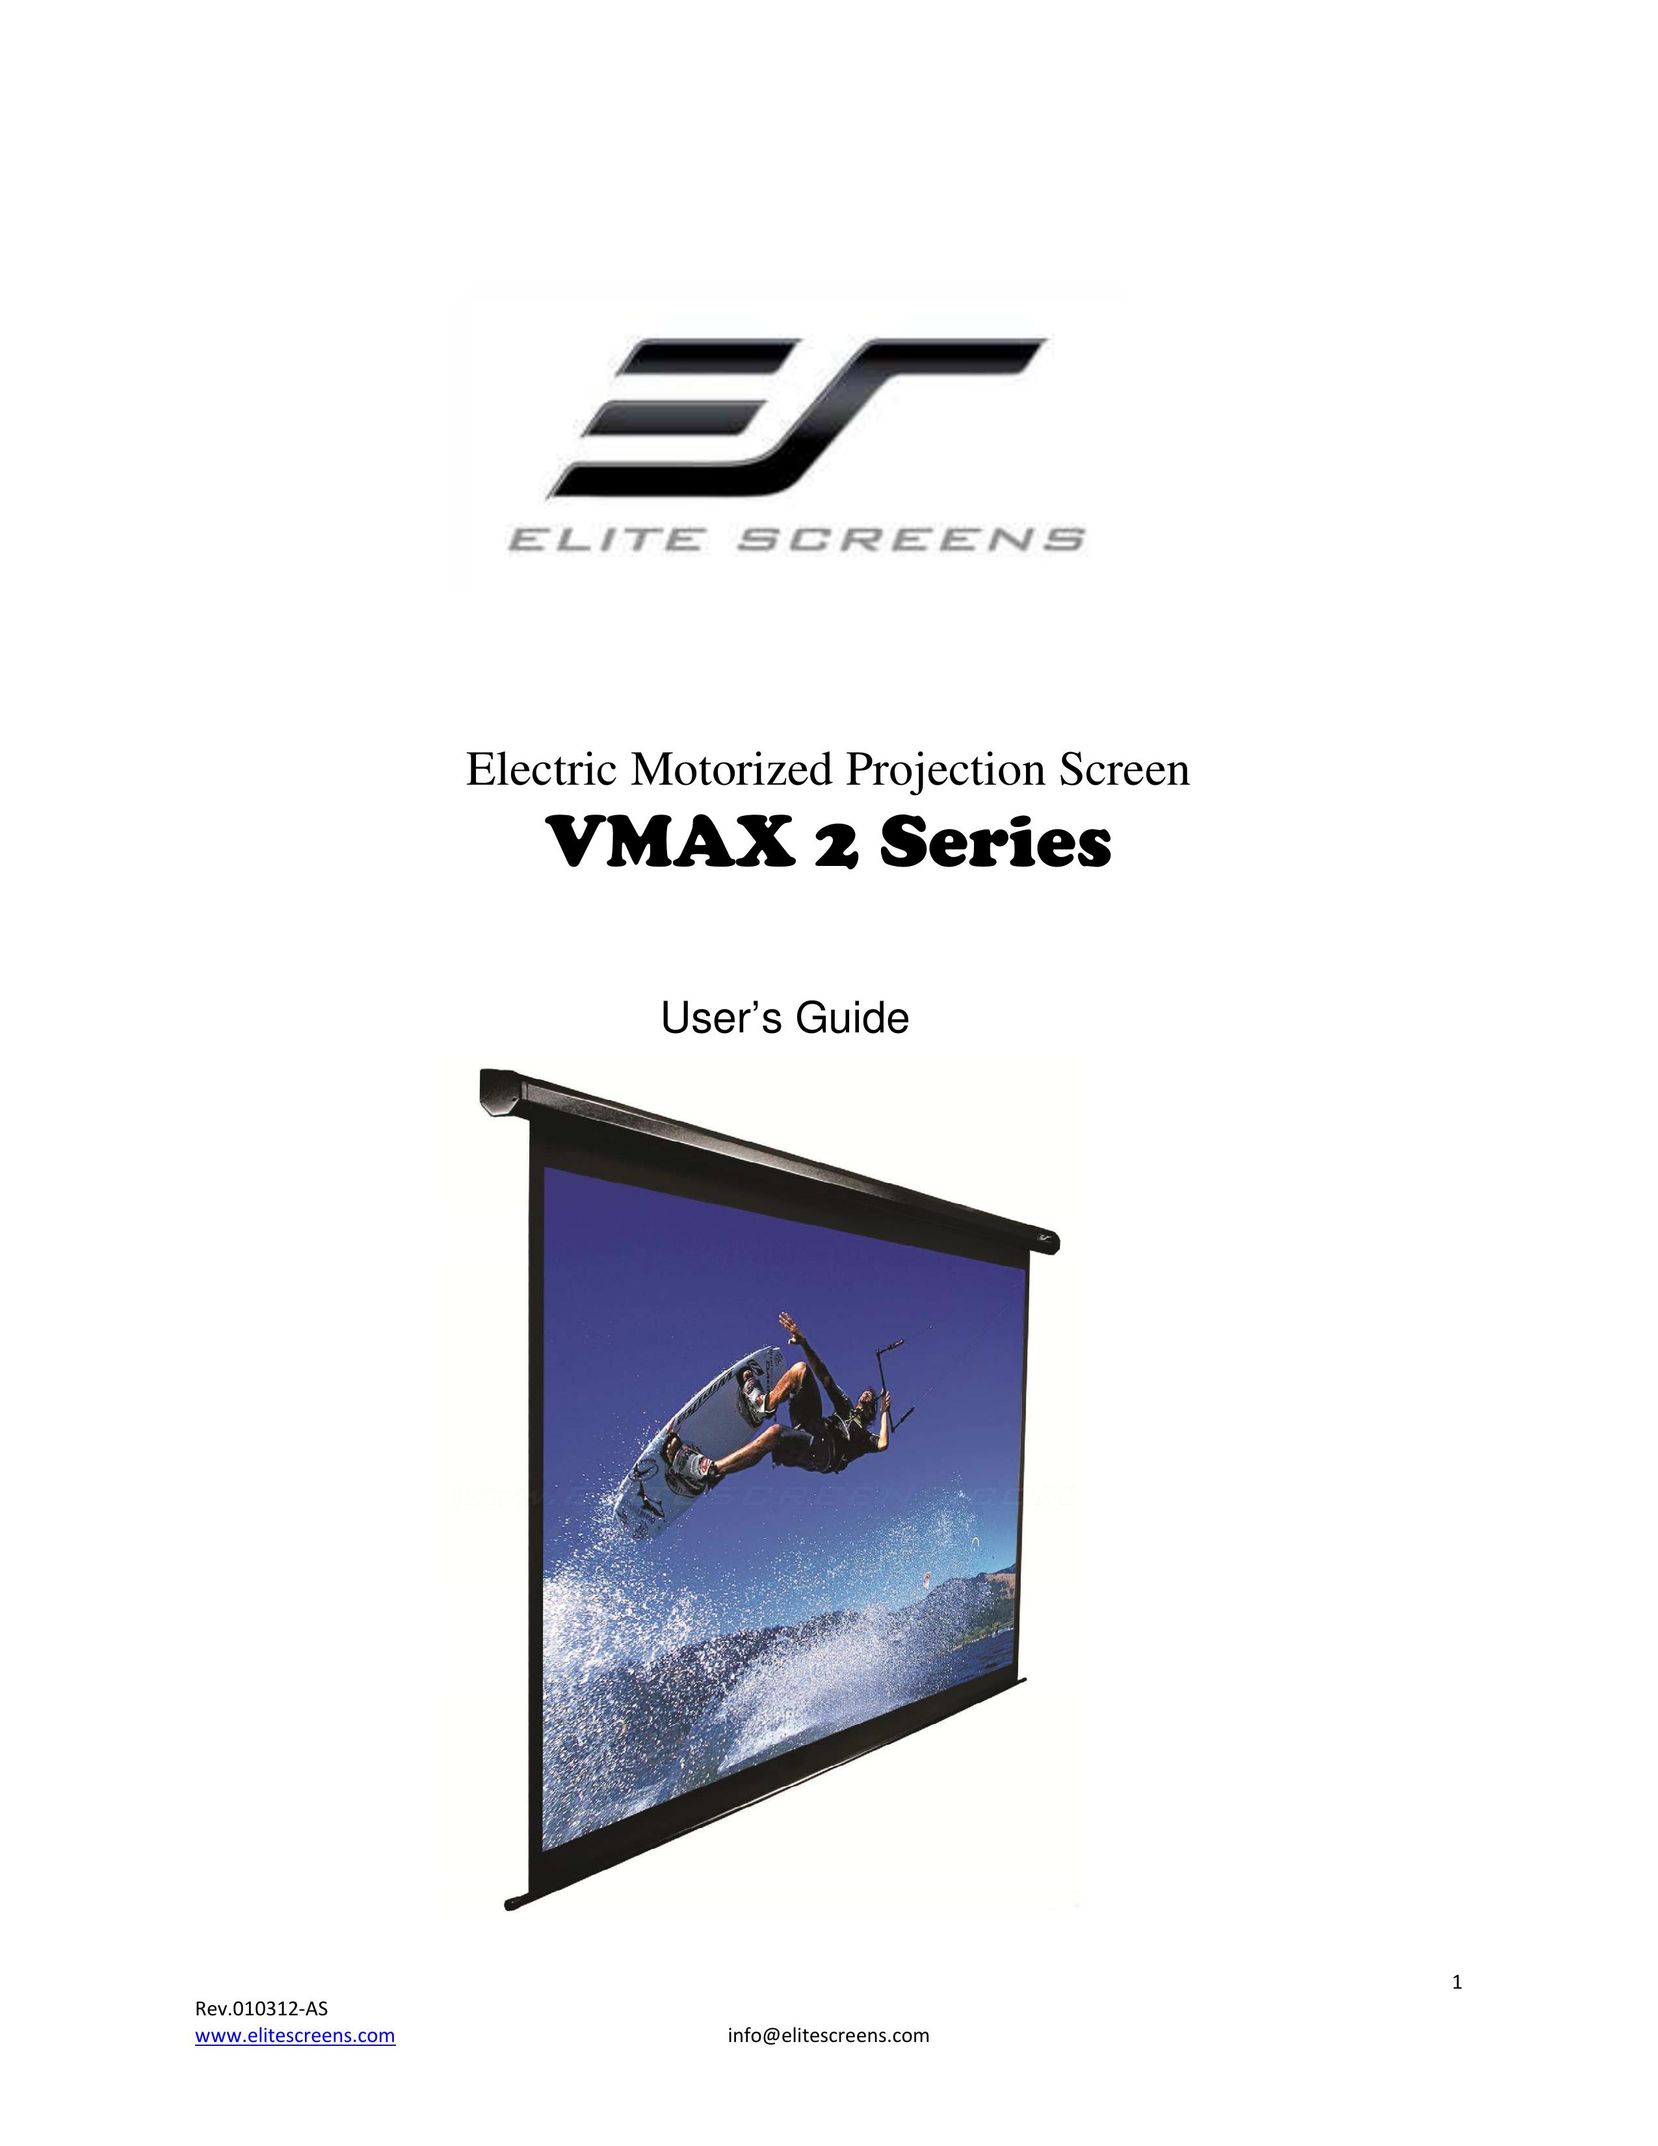 Elite Screens VMAX2 Home Theater Screen User Manual